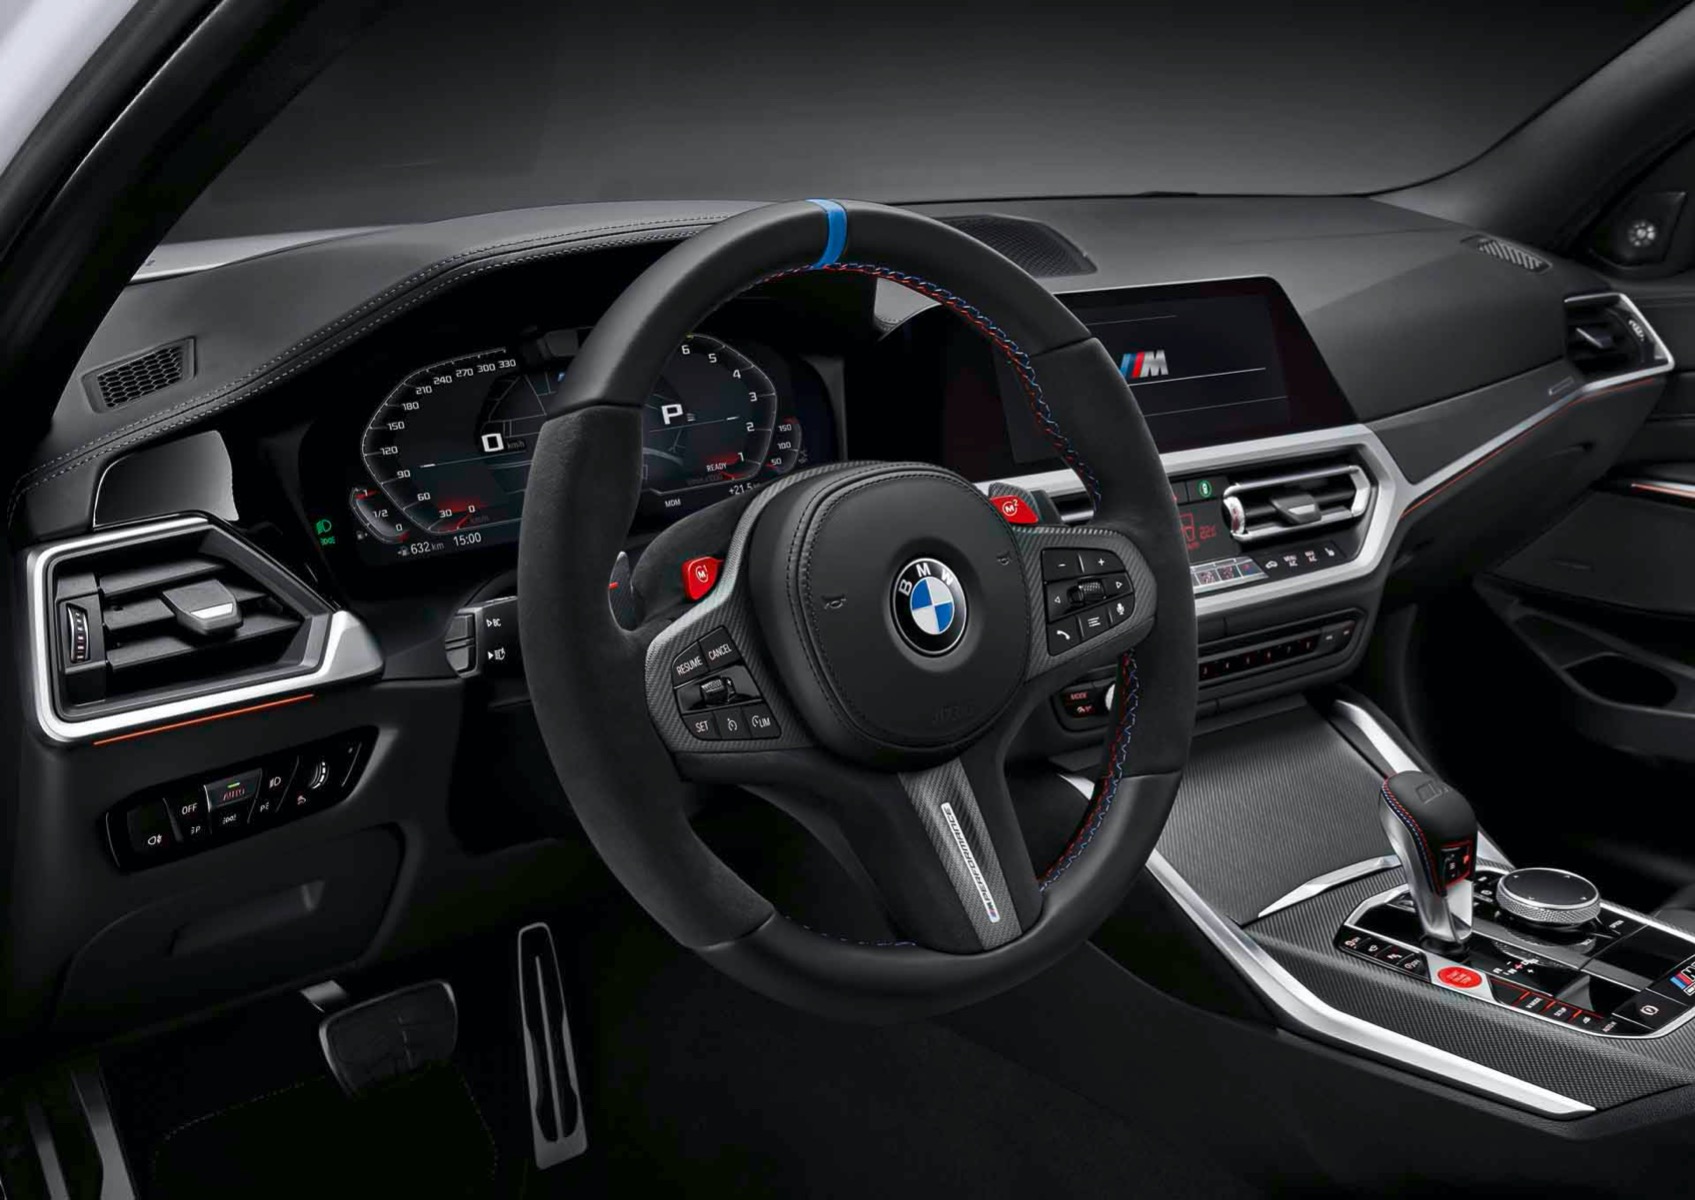 BMW 32302462910 buy a steering wheel | BMW Online Shop